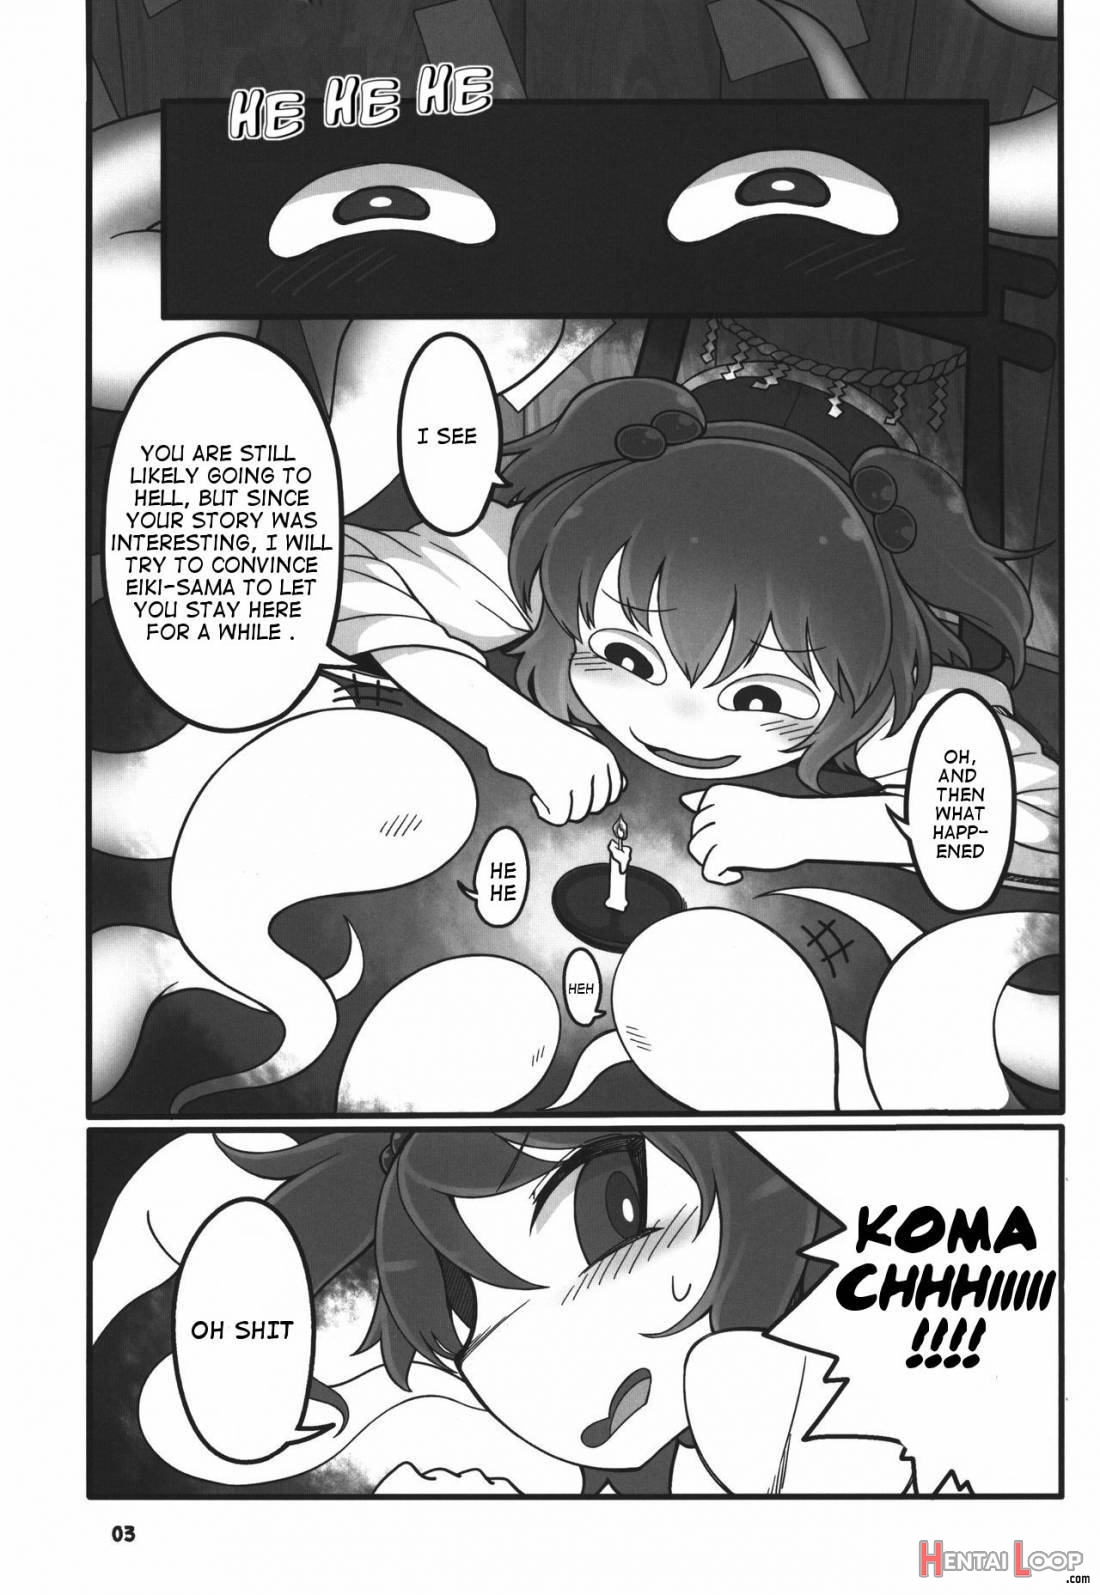 Shift Change Eiki-sama page 2